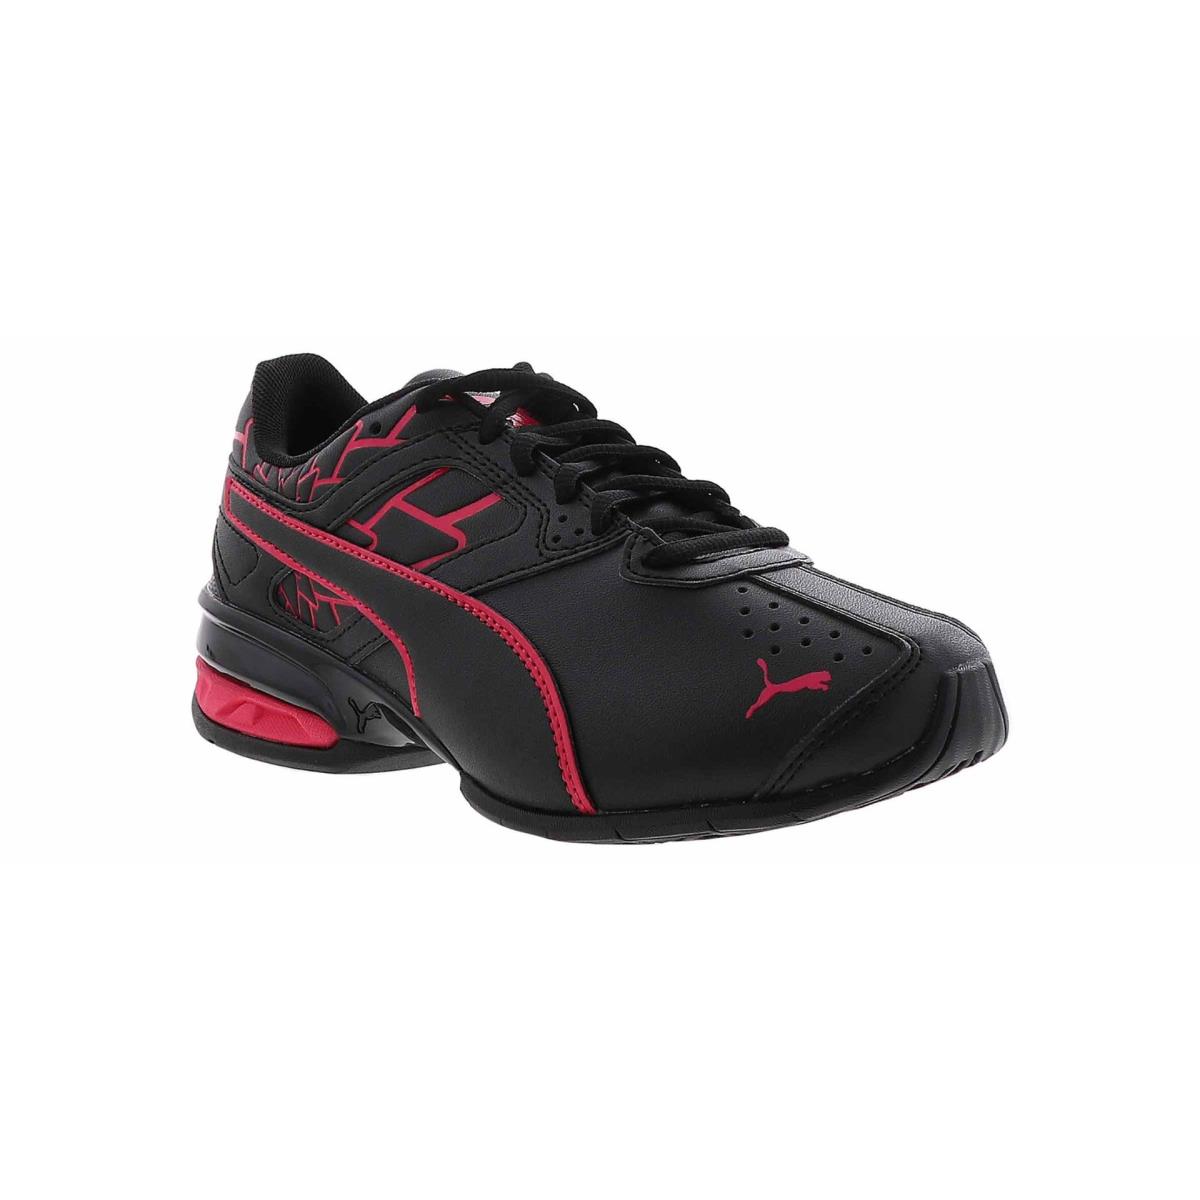 Puma Tazon 6 Shatter Wide-width Athletic Shoe Black Black